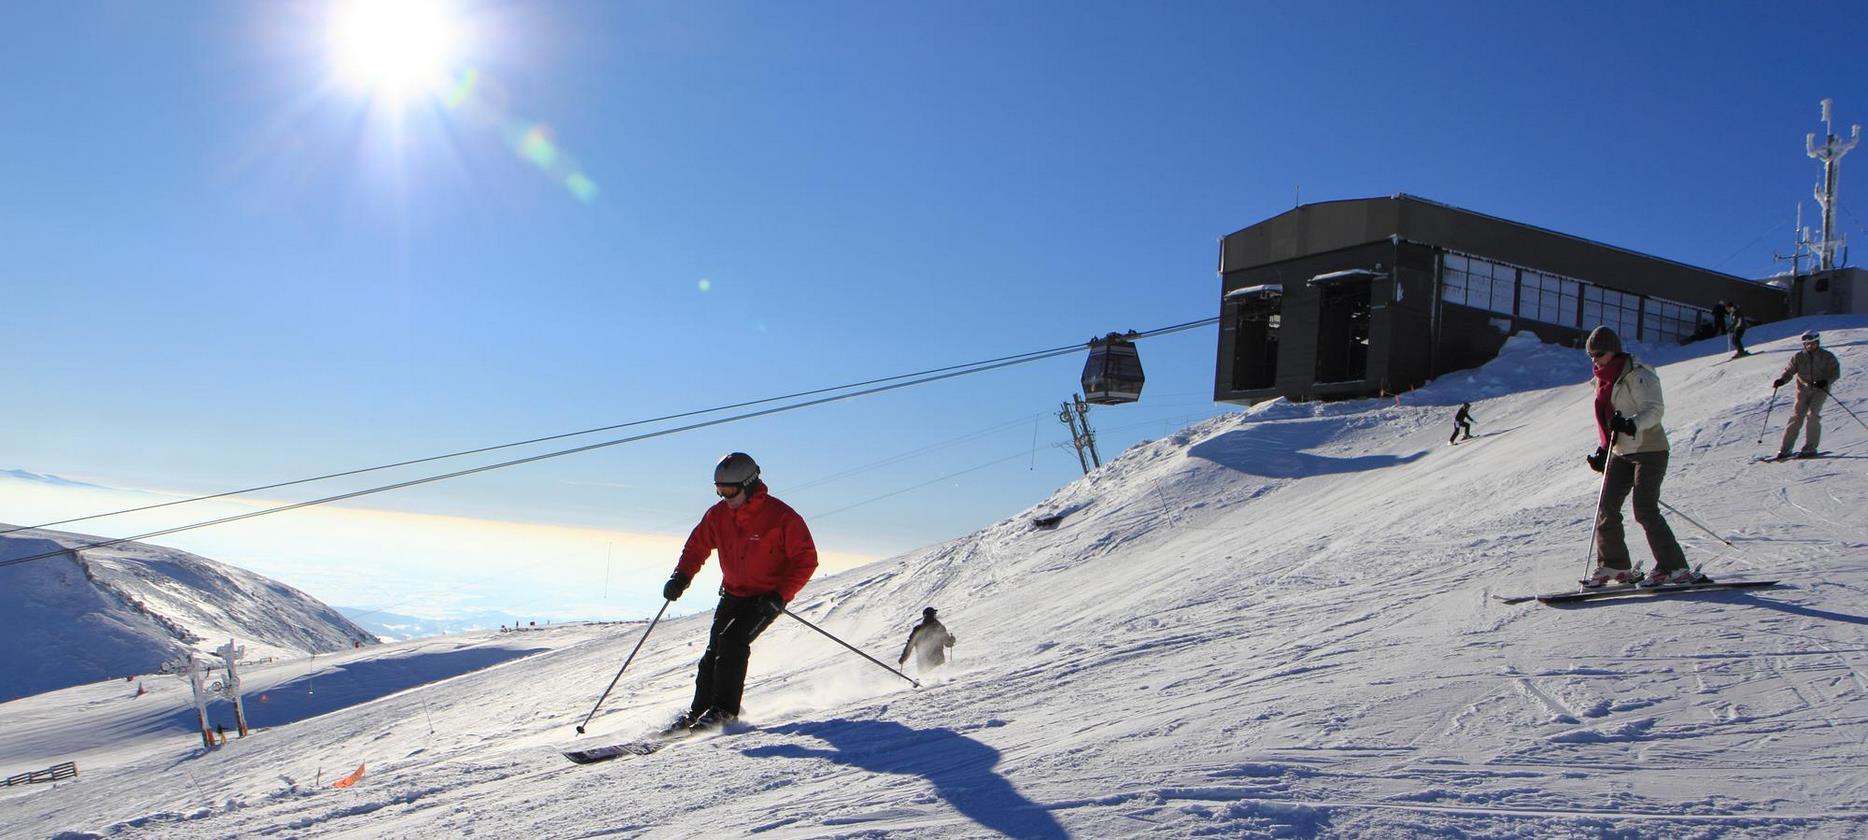 Super Besse - Ski School - Private ski lessons